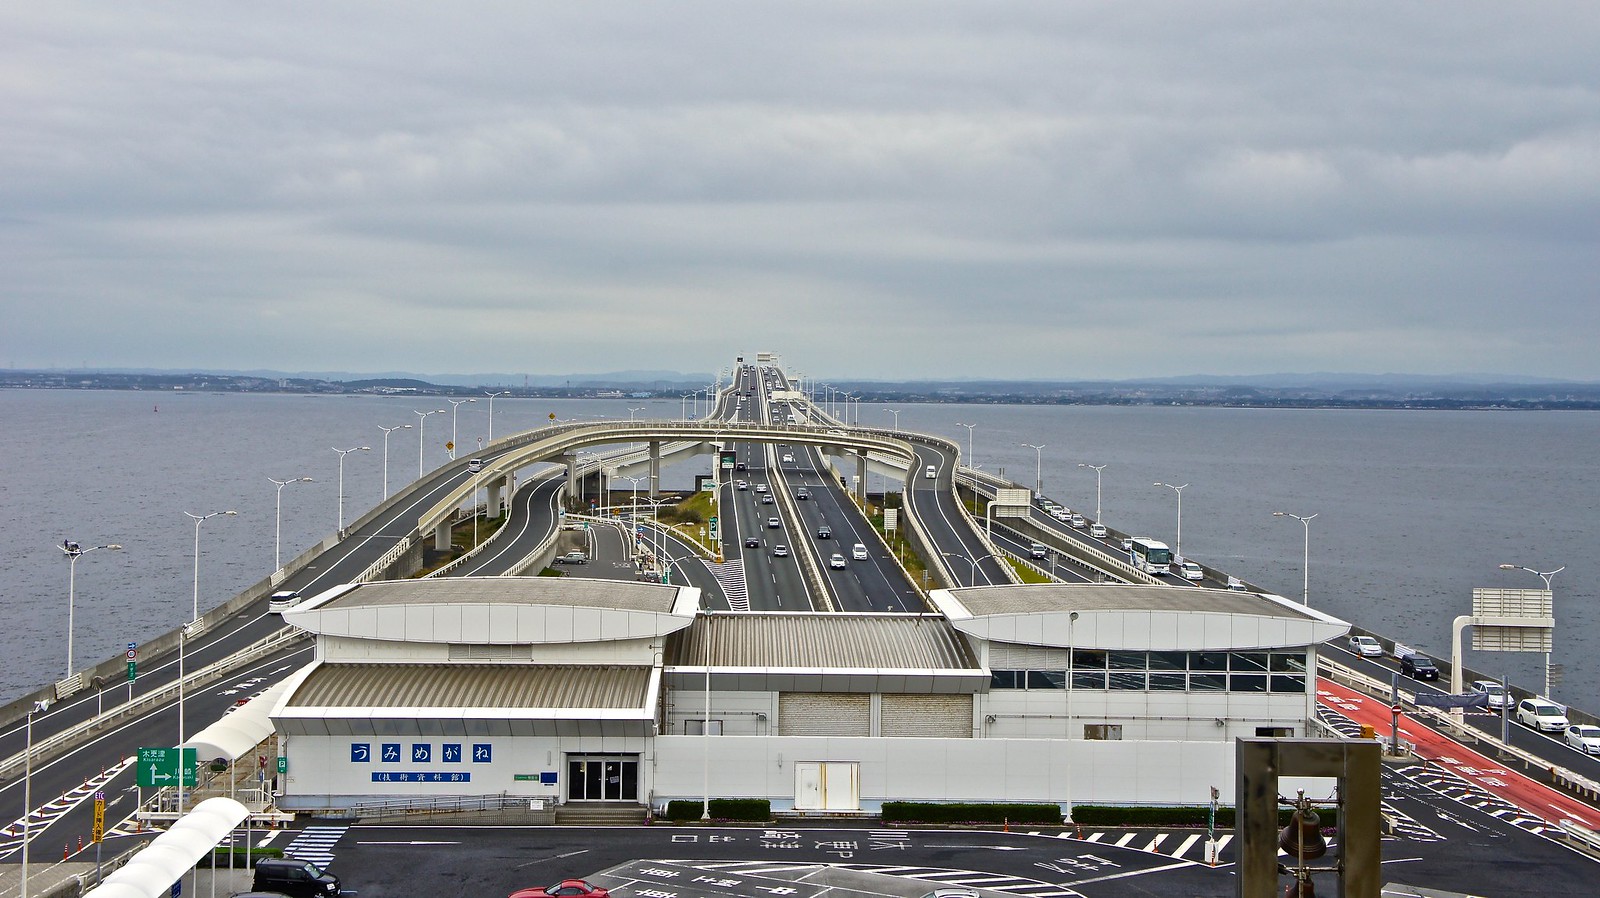 Umihotaru - Parking Area